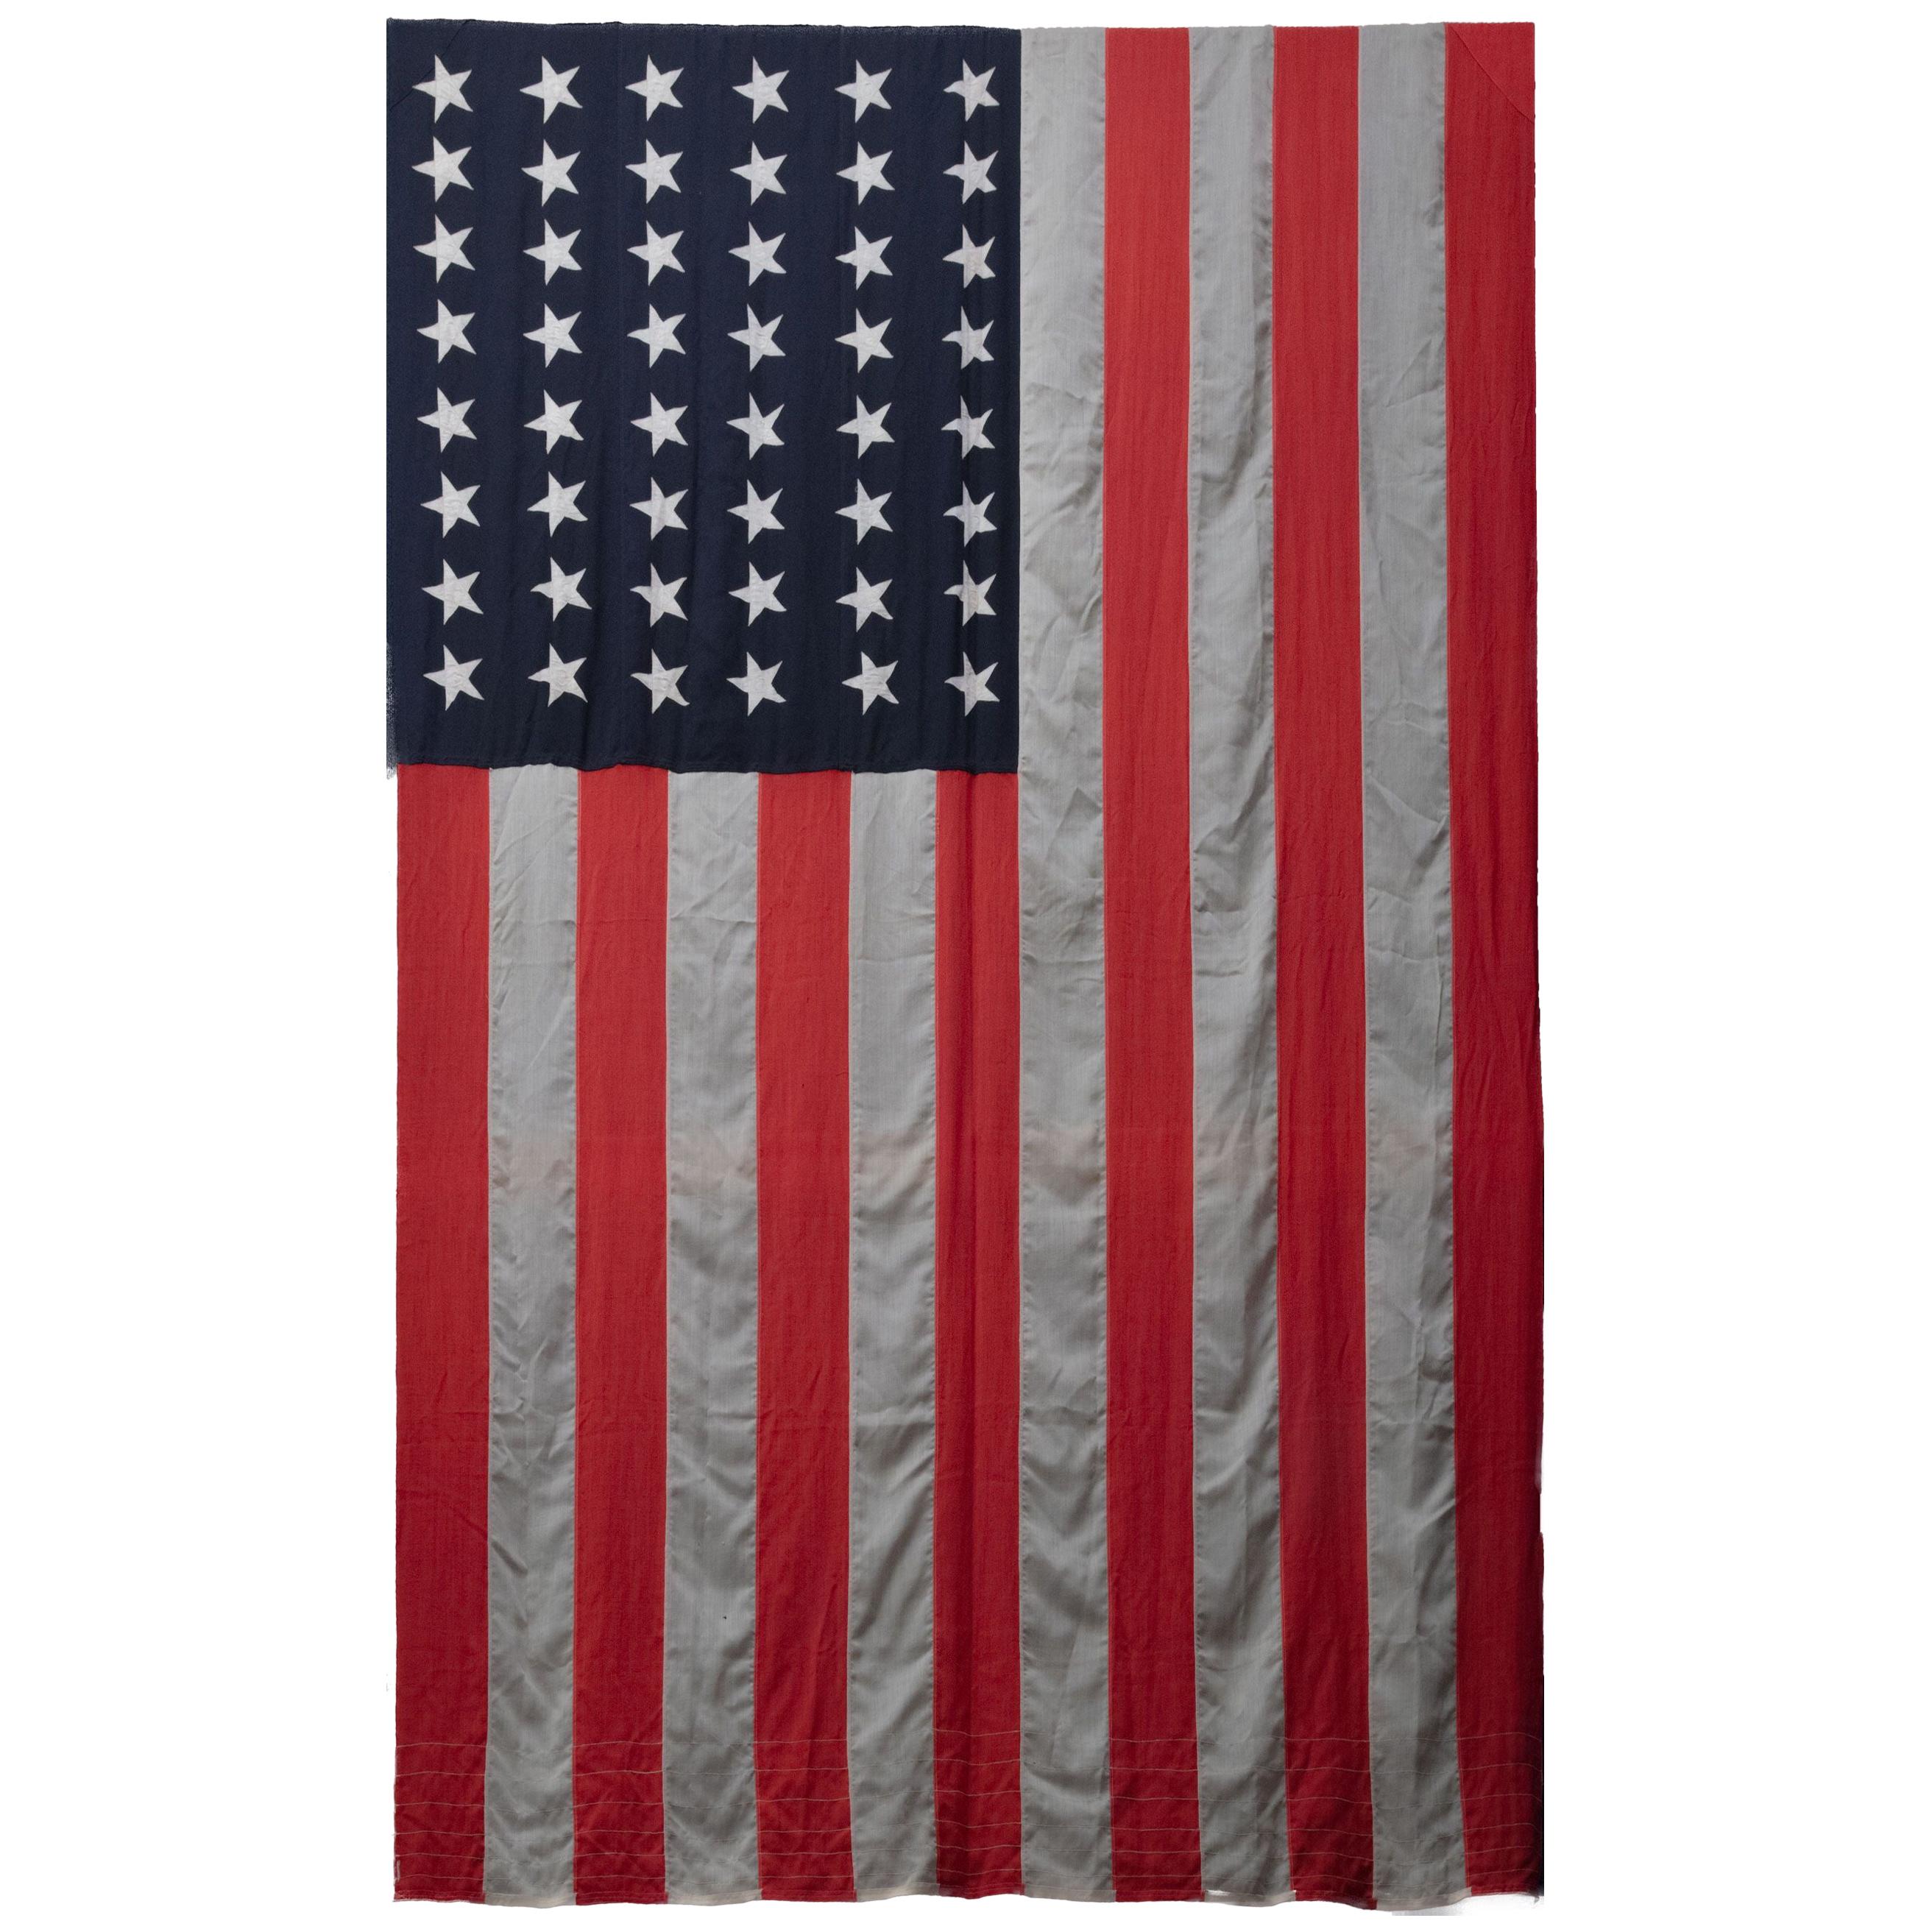 48-Star American Flag